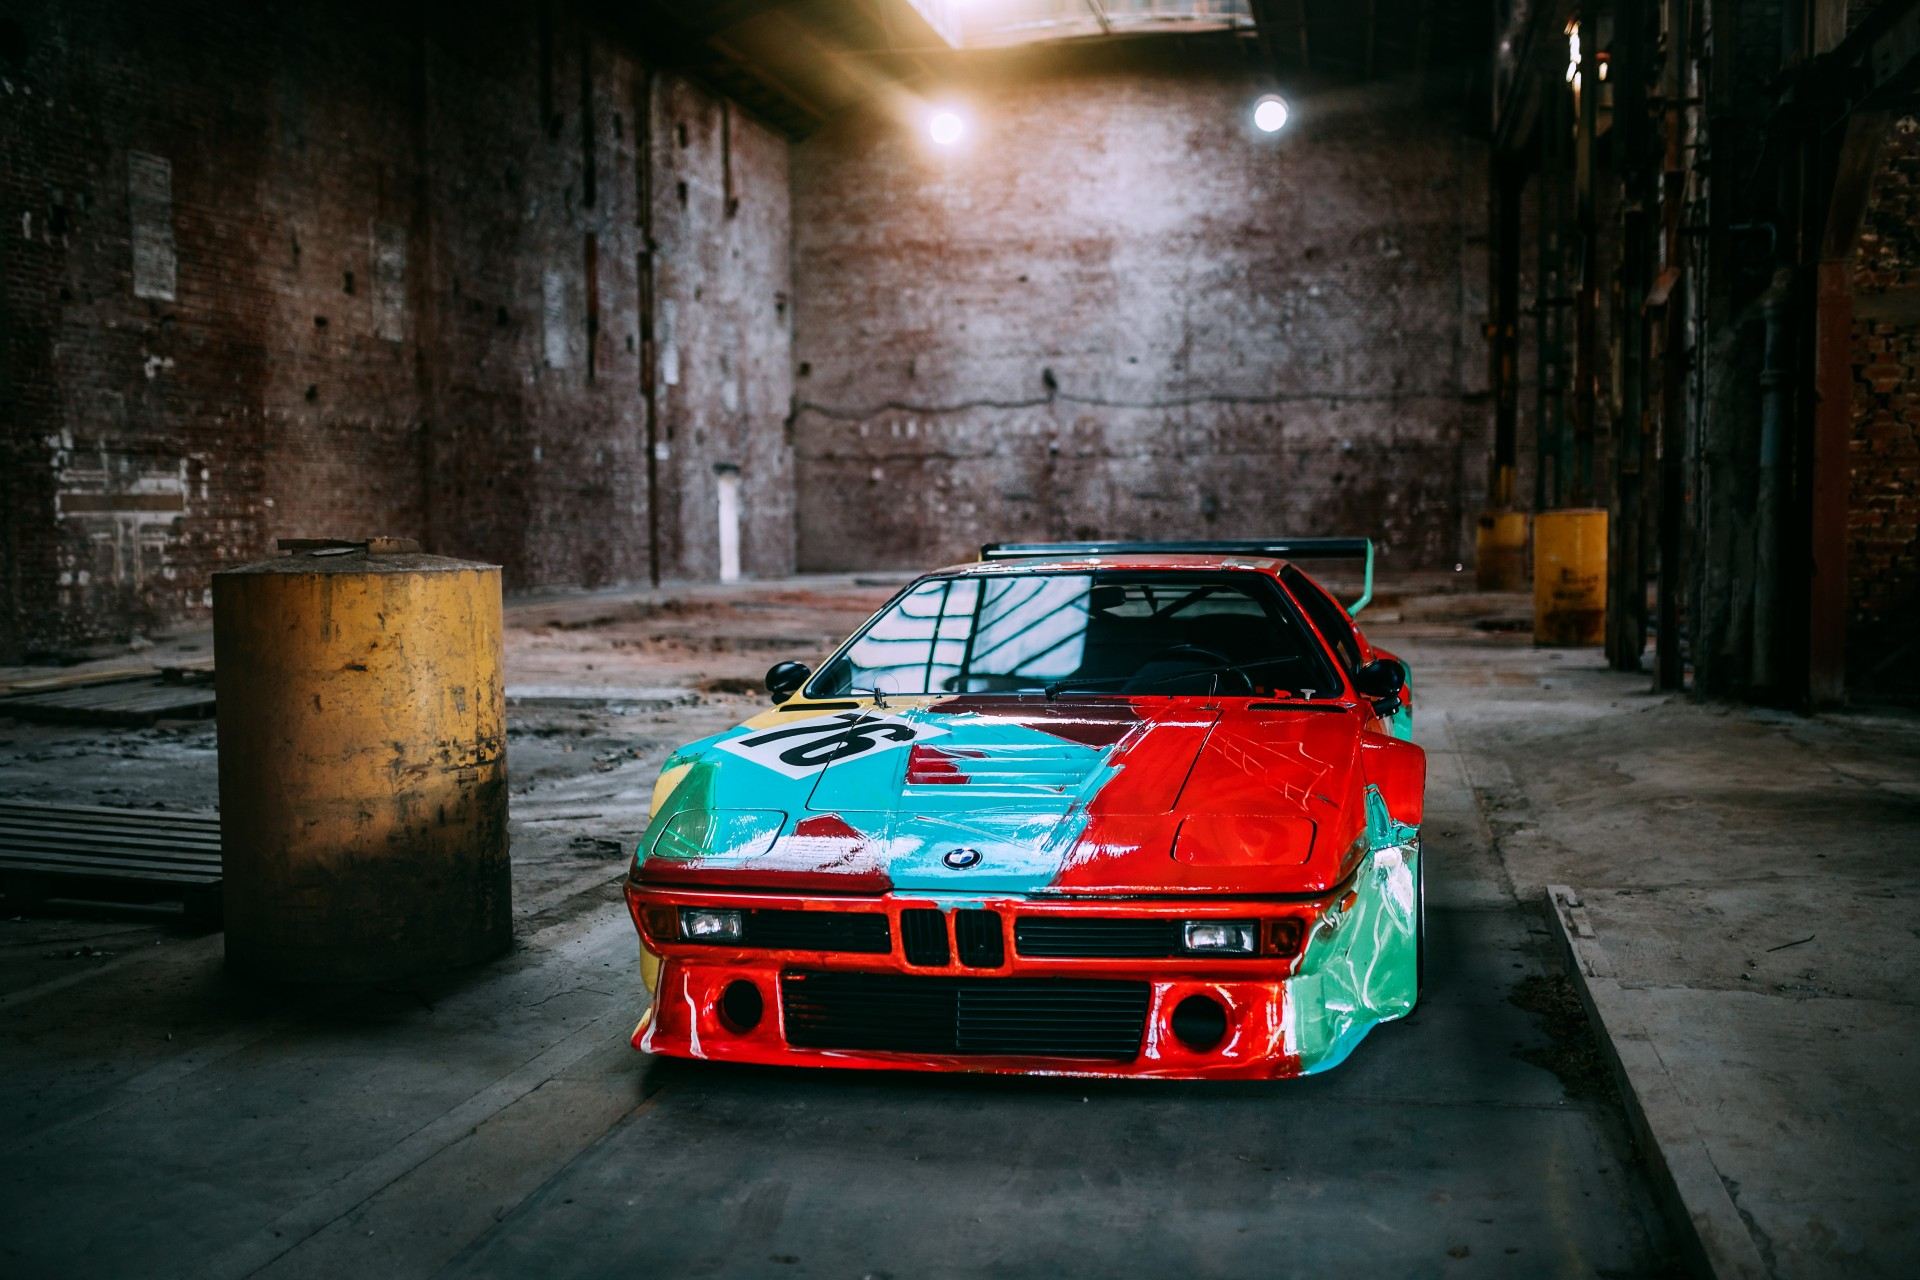 BMW M1 Andy Warhol (5)